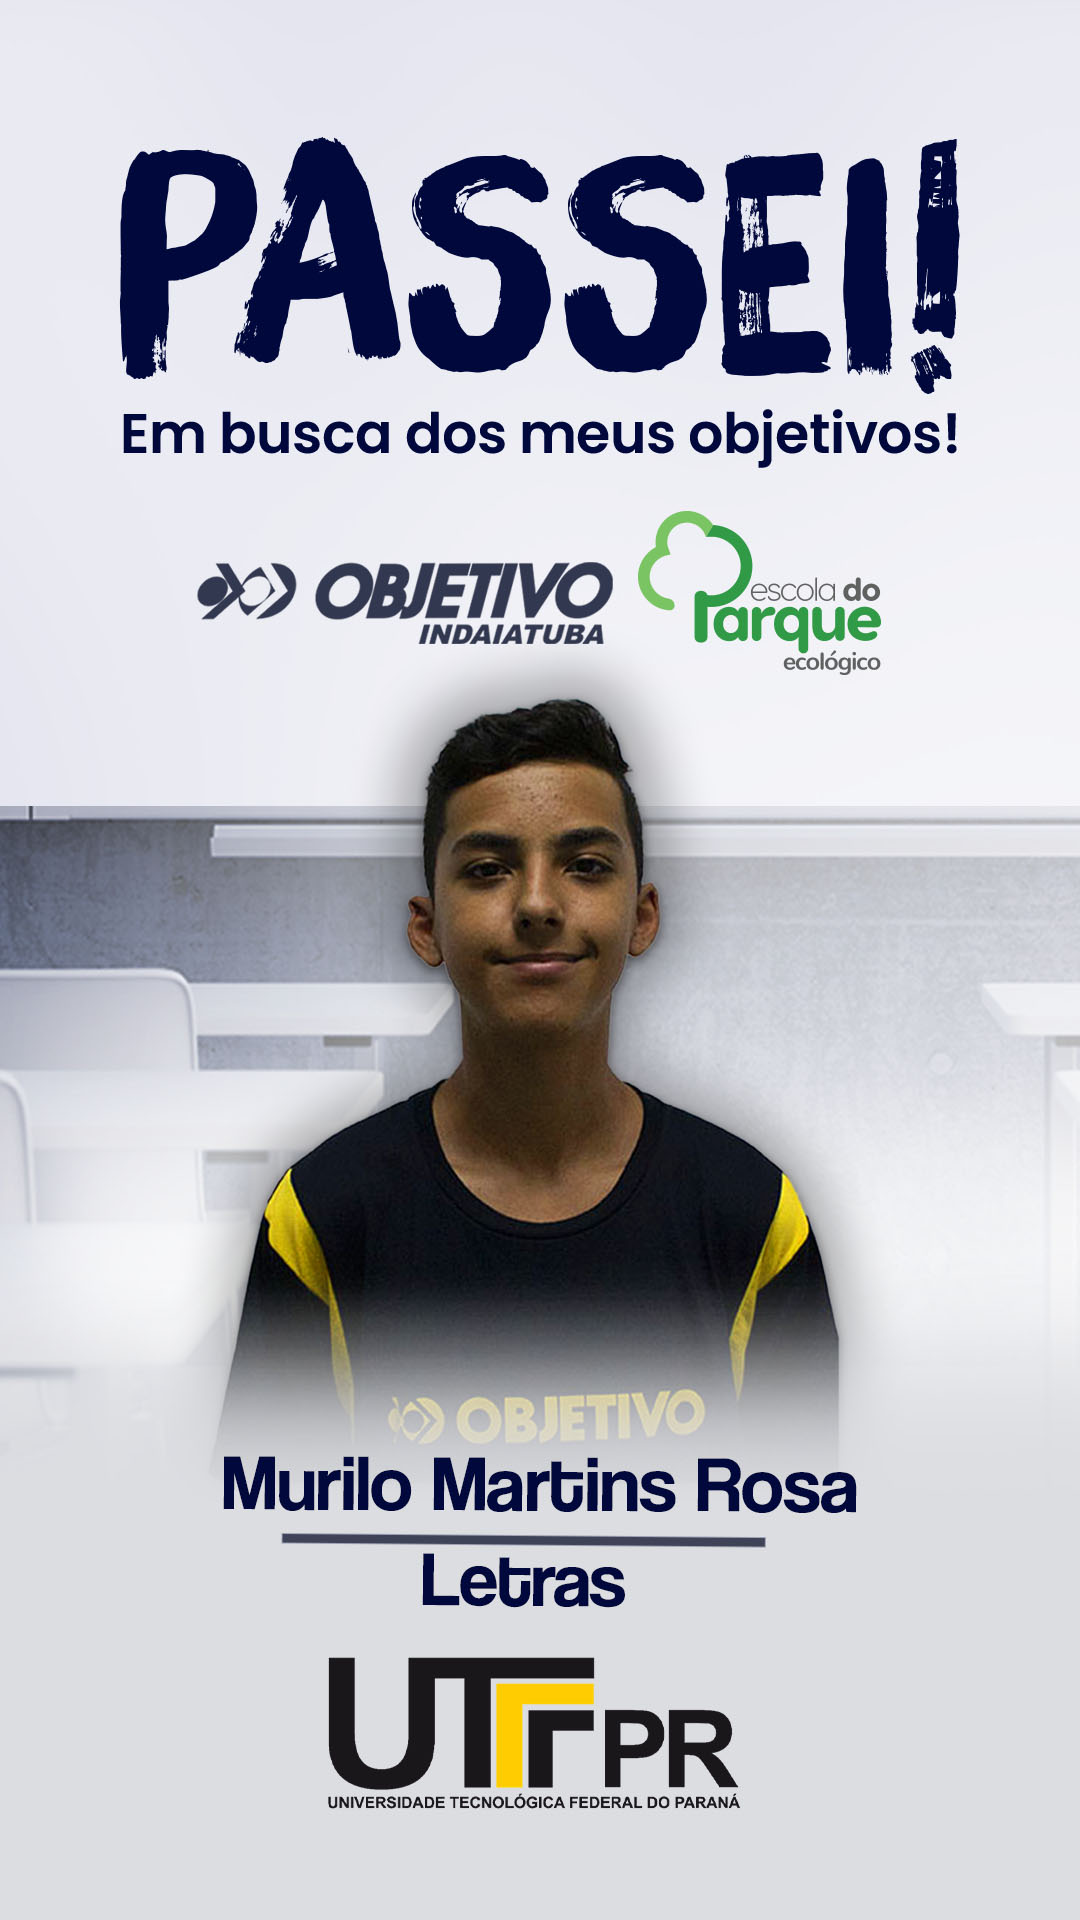 Murilo Martins Rosa